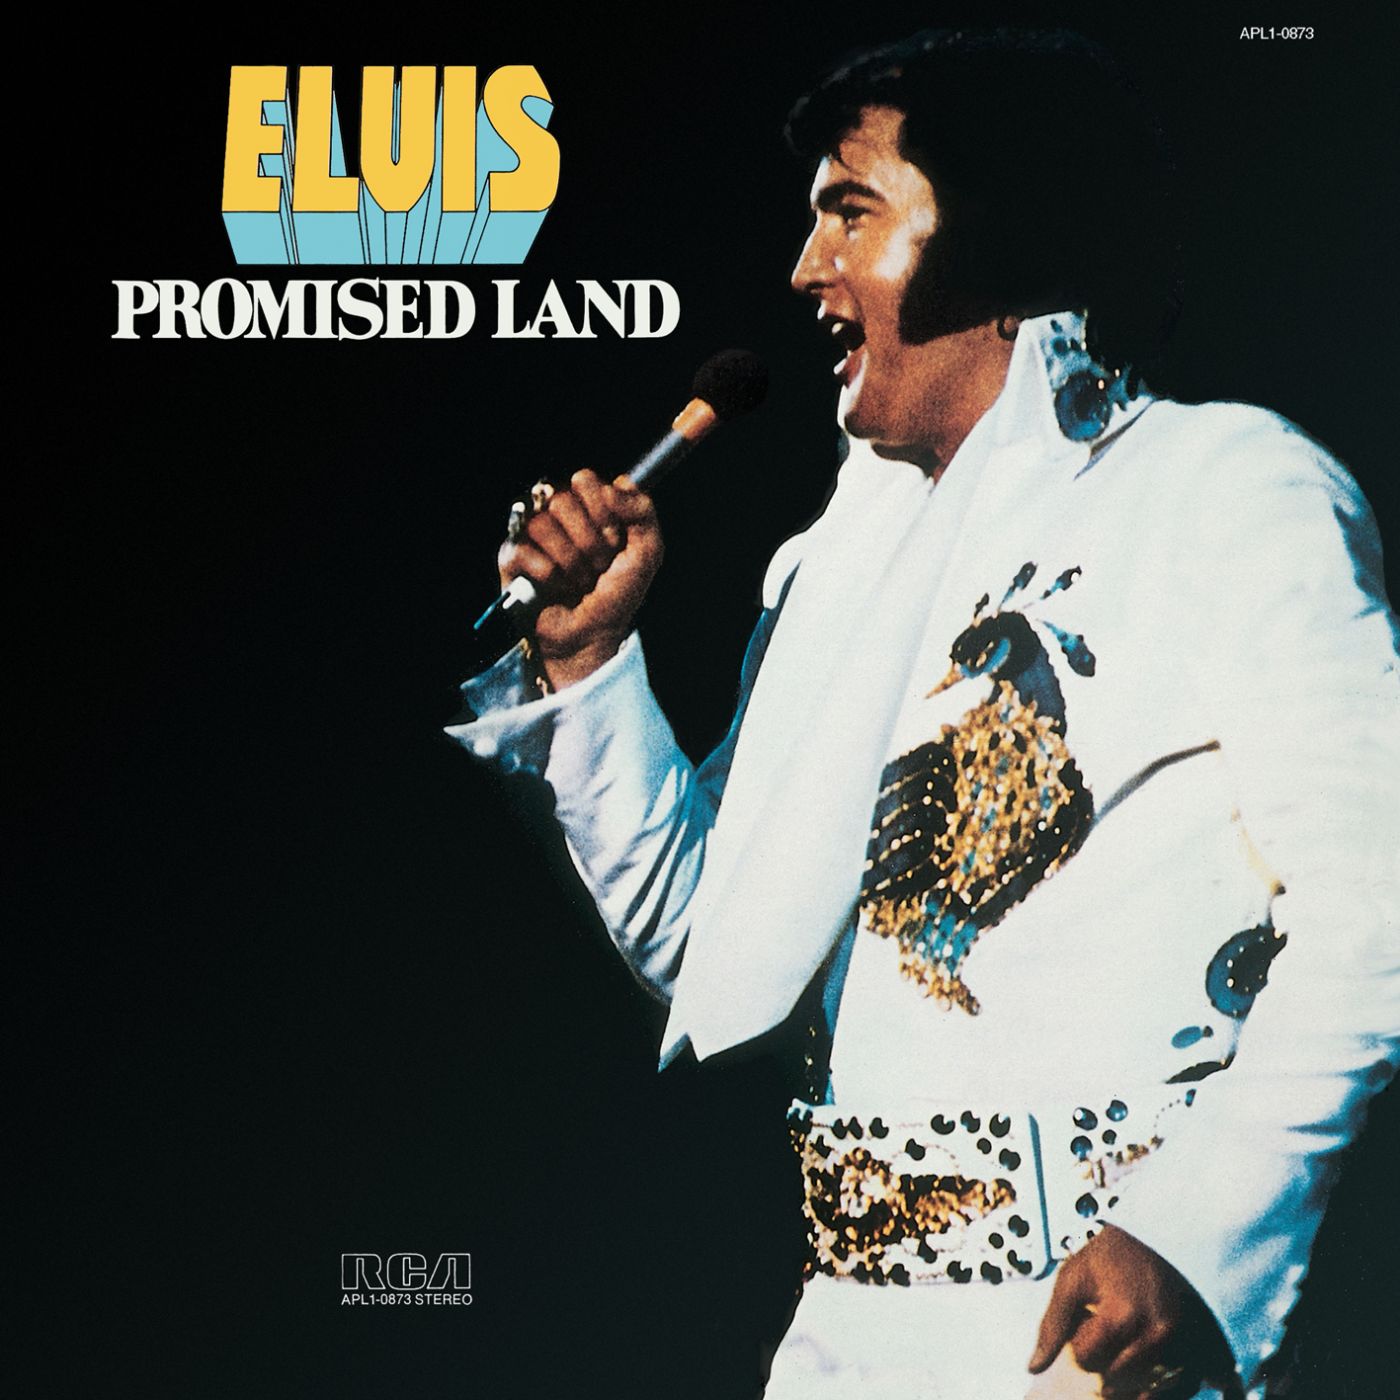 Art for Promised Land by Elvis Presley